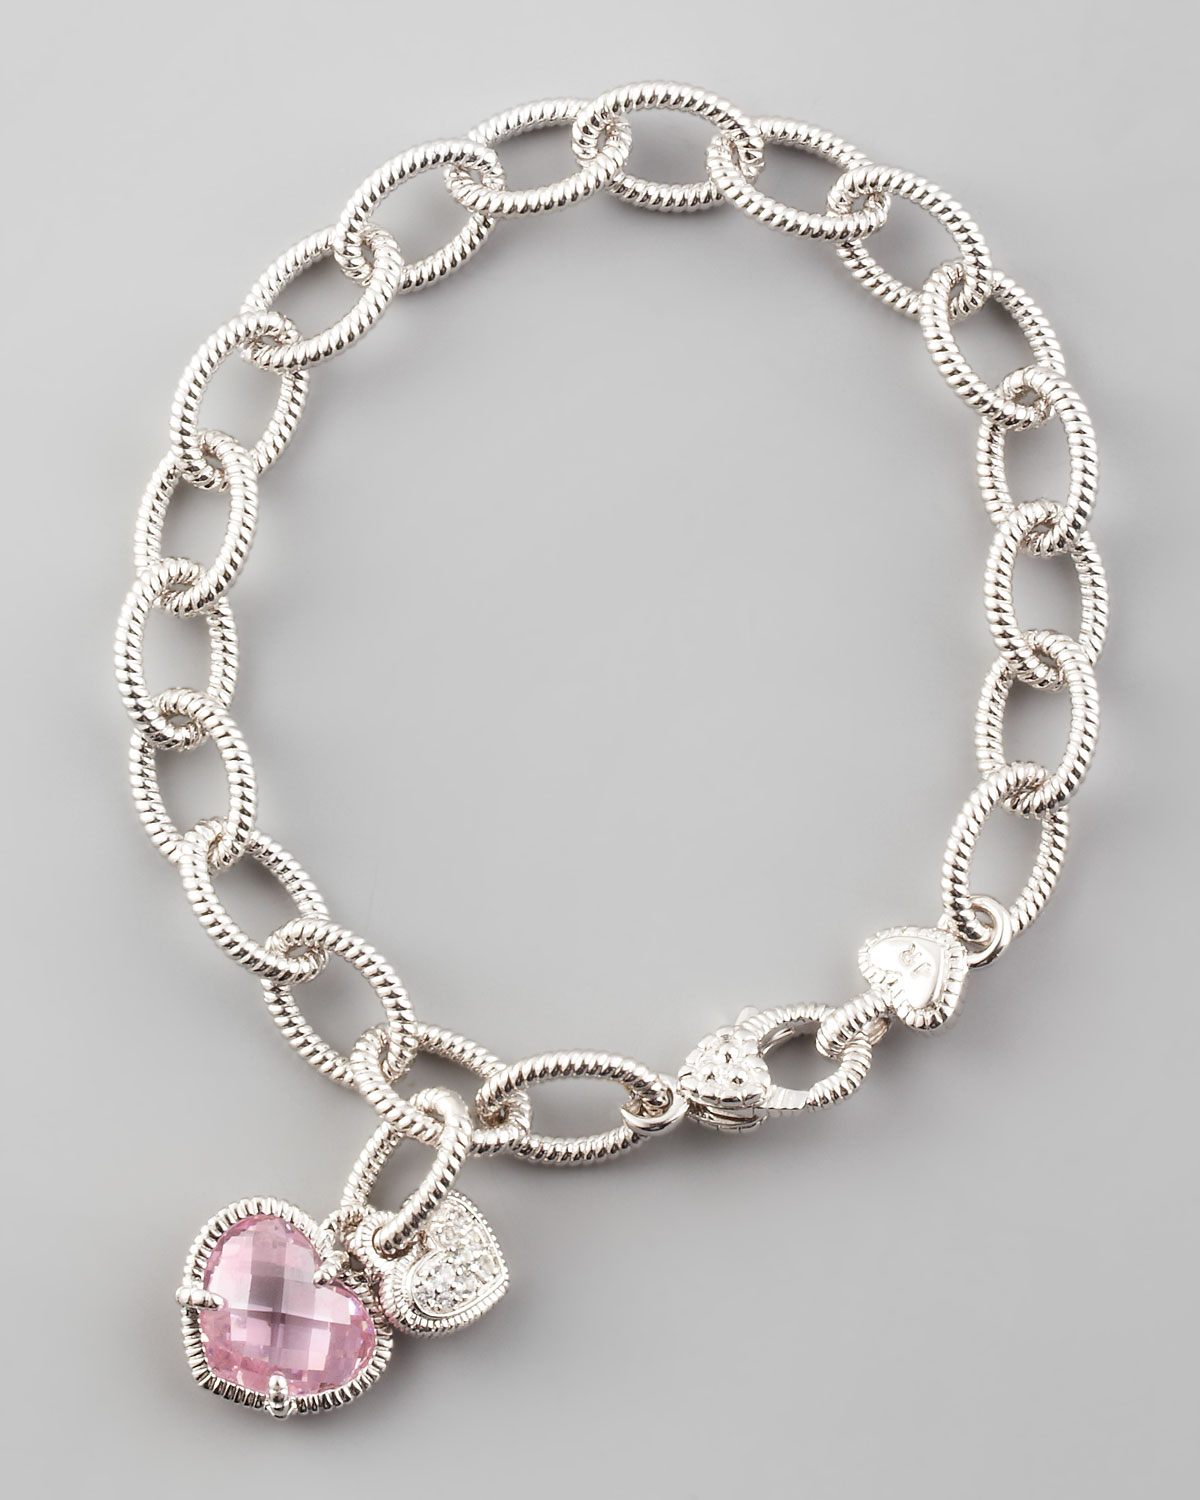 Lyst - Judith Ripka Heart Charm Bracelet in Metallic